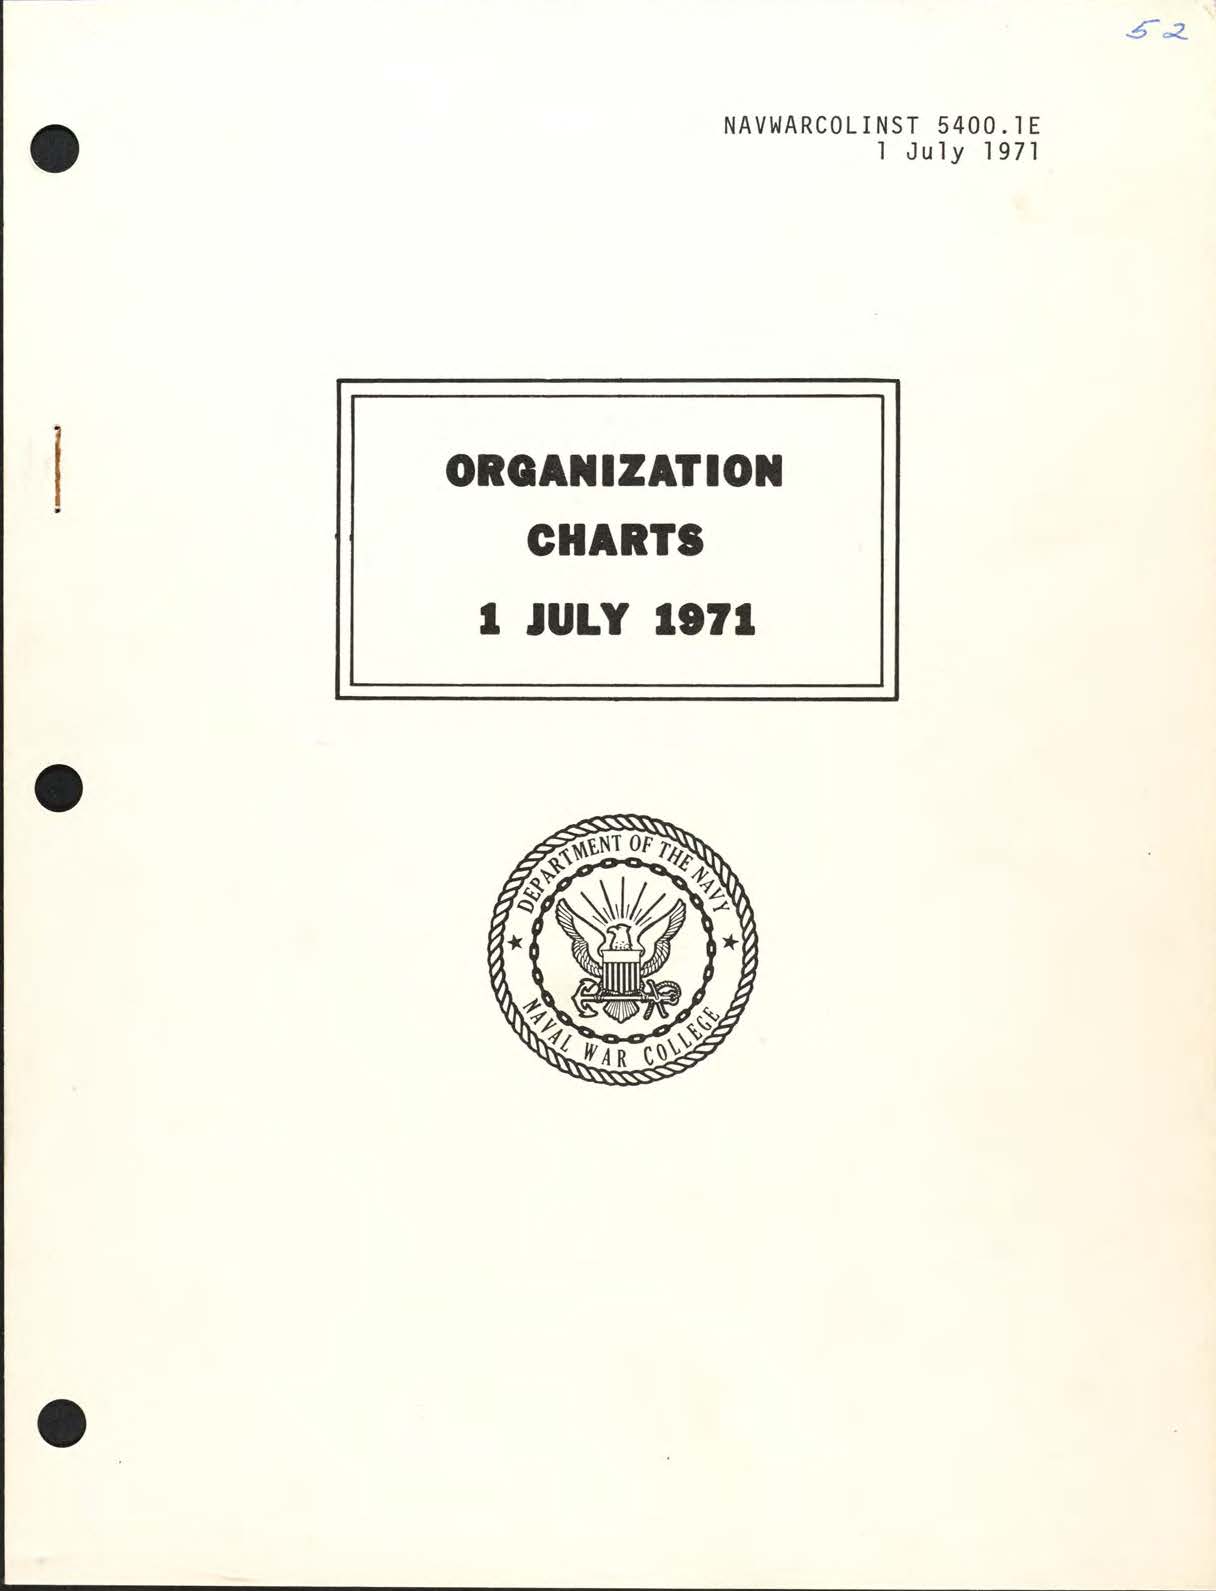 Organization charts: Naval War College, NAVWARCOLINST 5400.1E